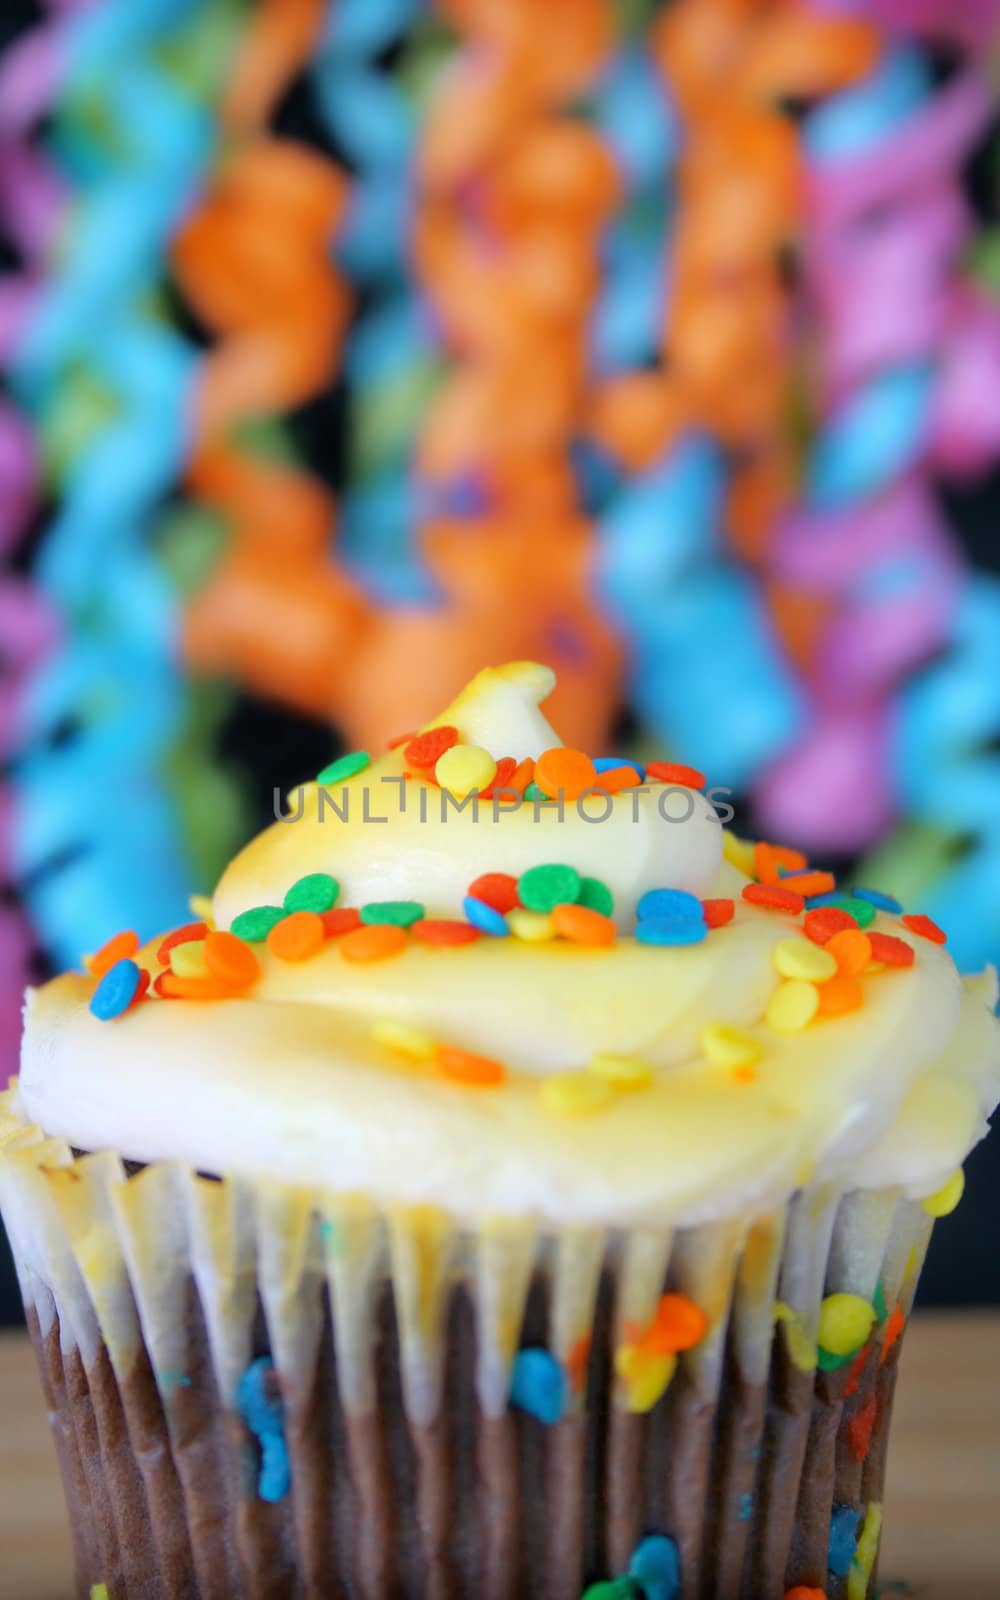 Cupcake by thephotoguy